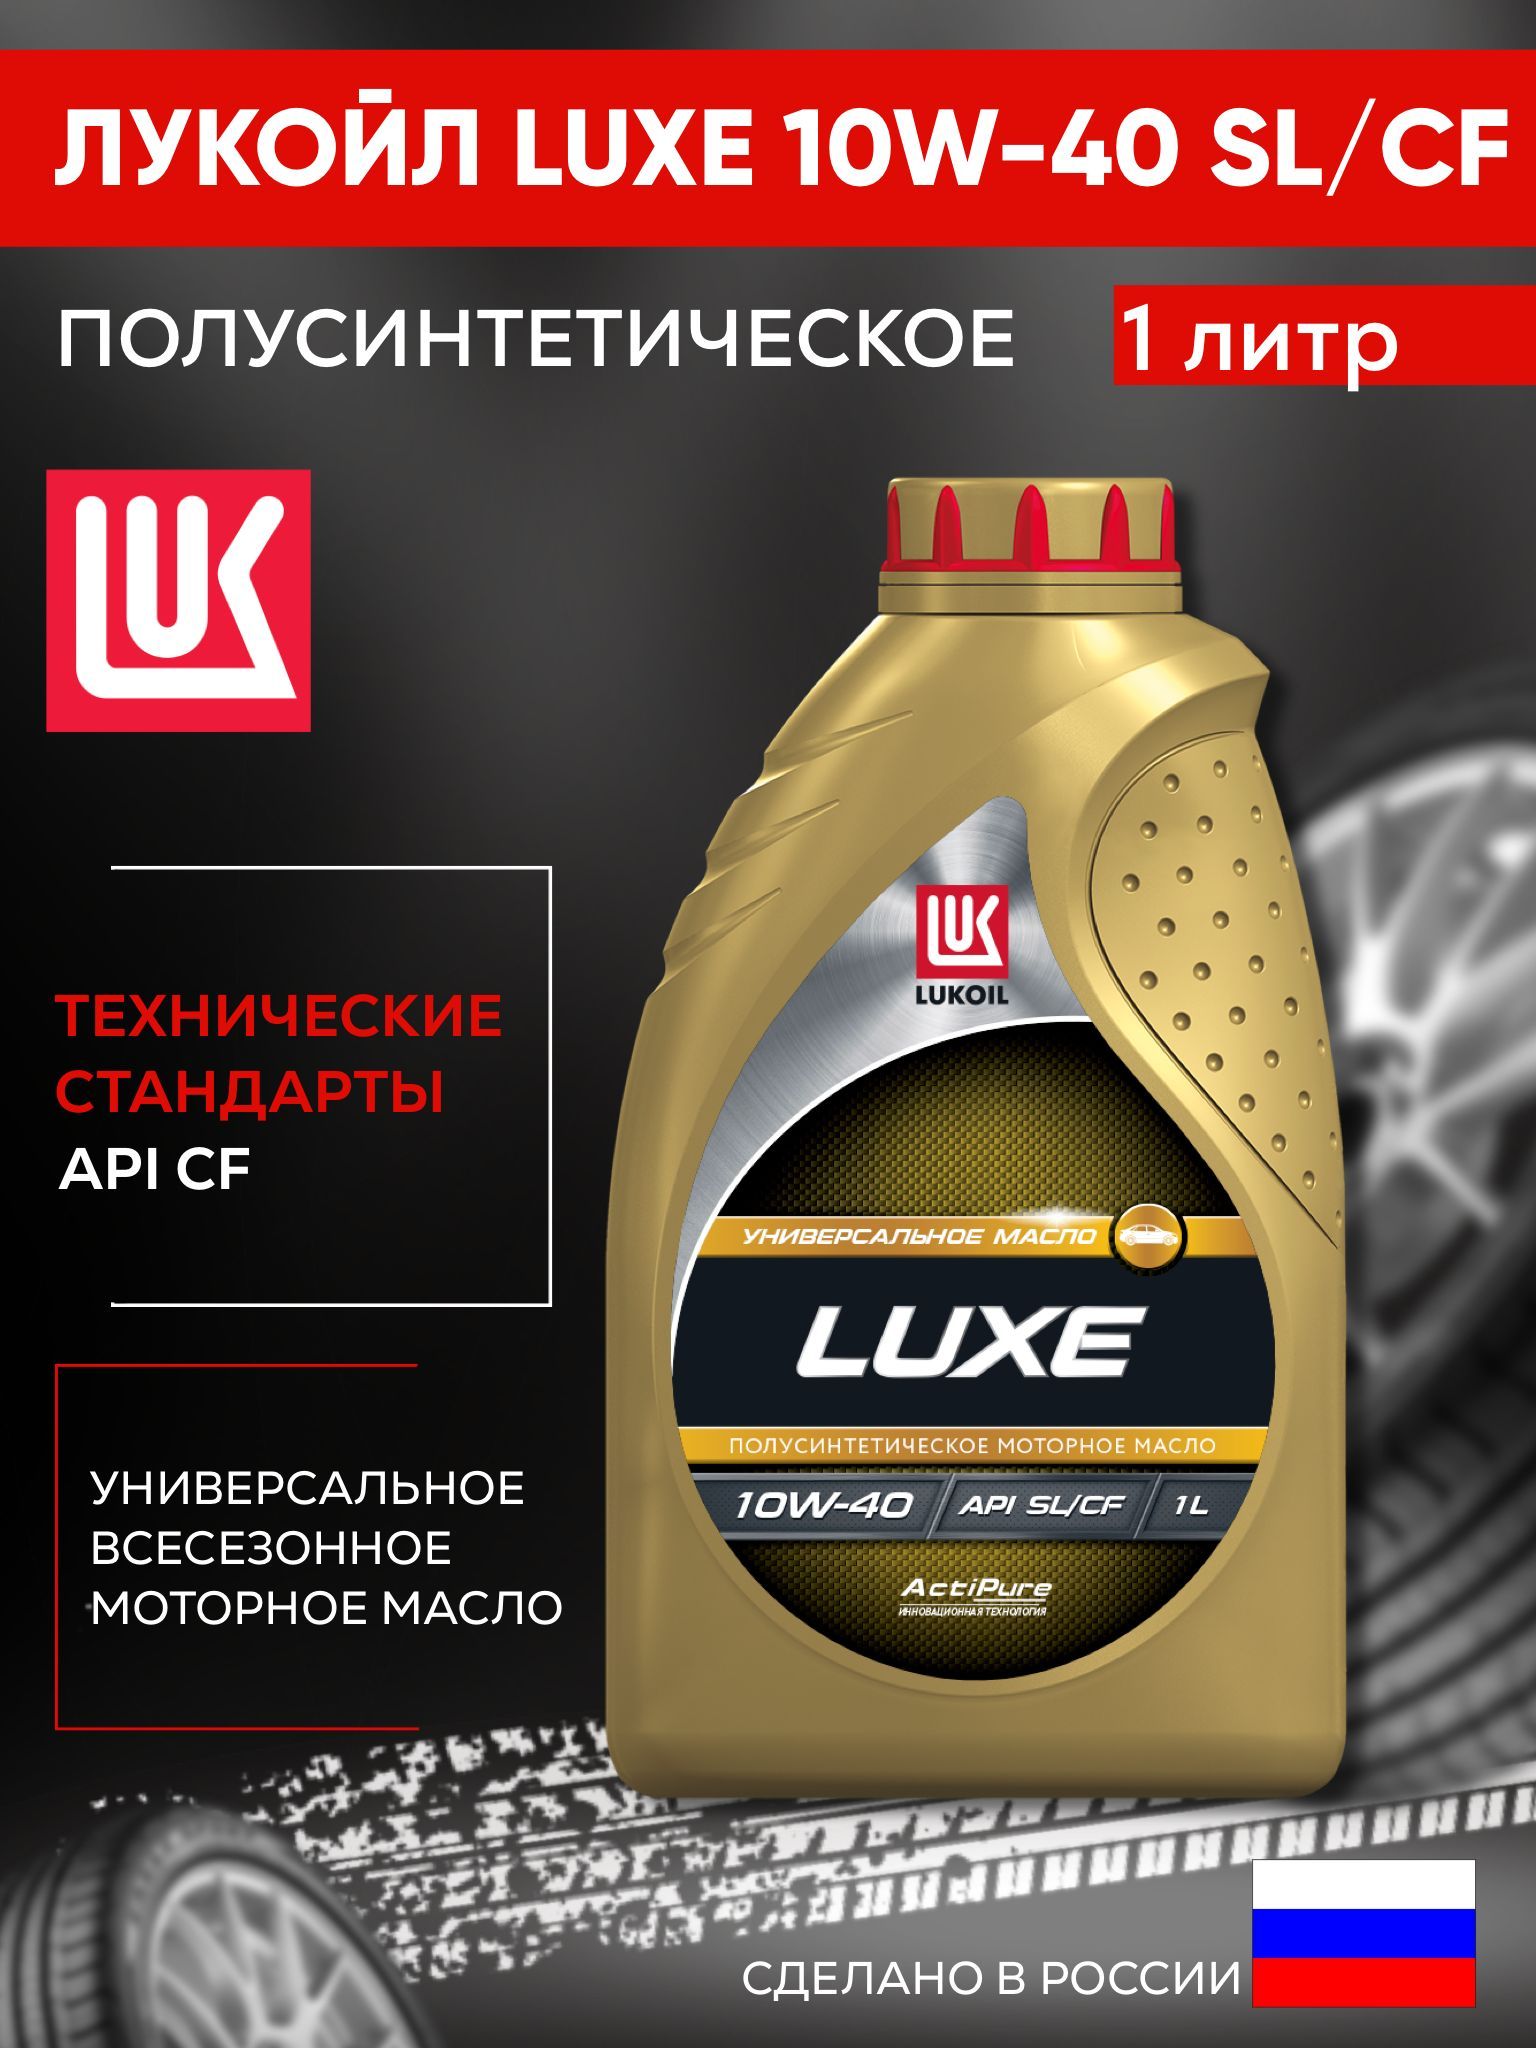 Моторное масло лукойл люкс отзывы. Lukoil Luxe 10w-40. Lukoil Avantgarde Ultra 10w-40. Лукойл Люкс 10w 40 характеристики. Лукойл Люкс 10w 40 полусинтетика отзывы.